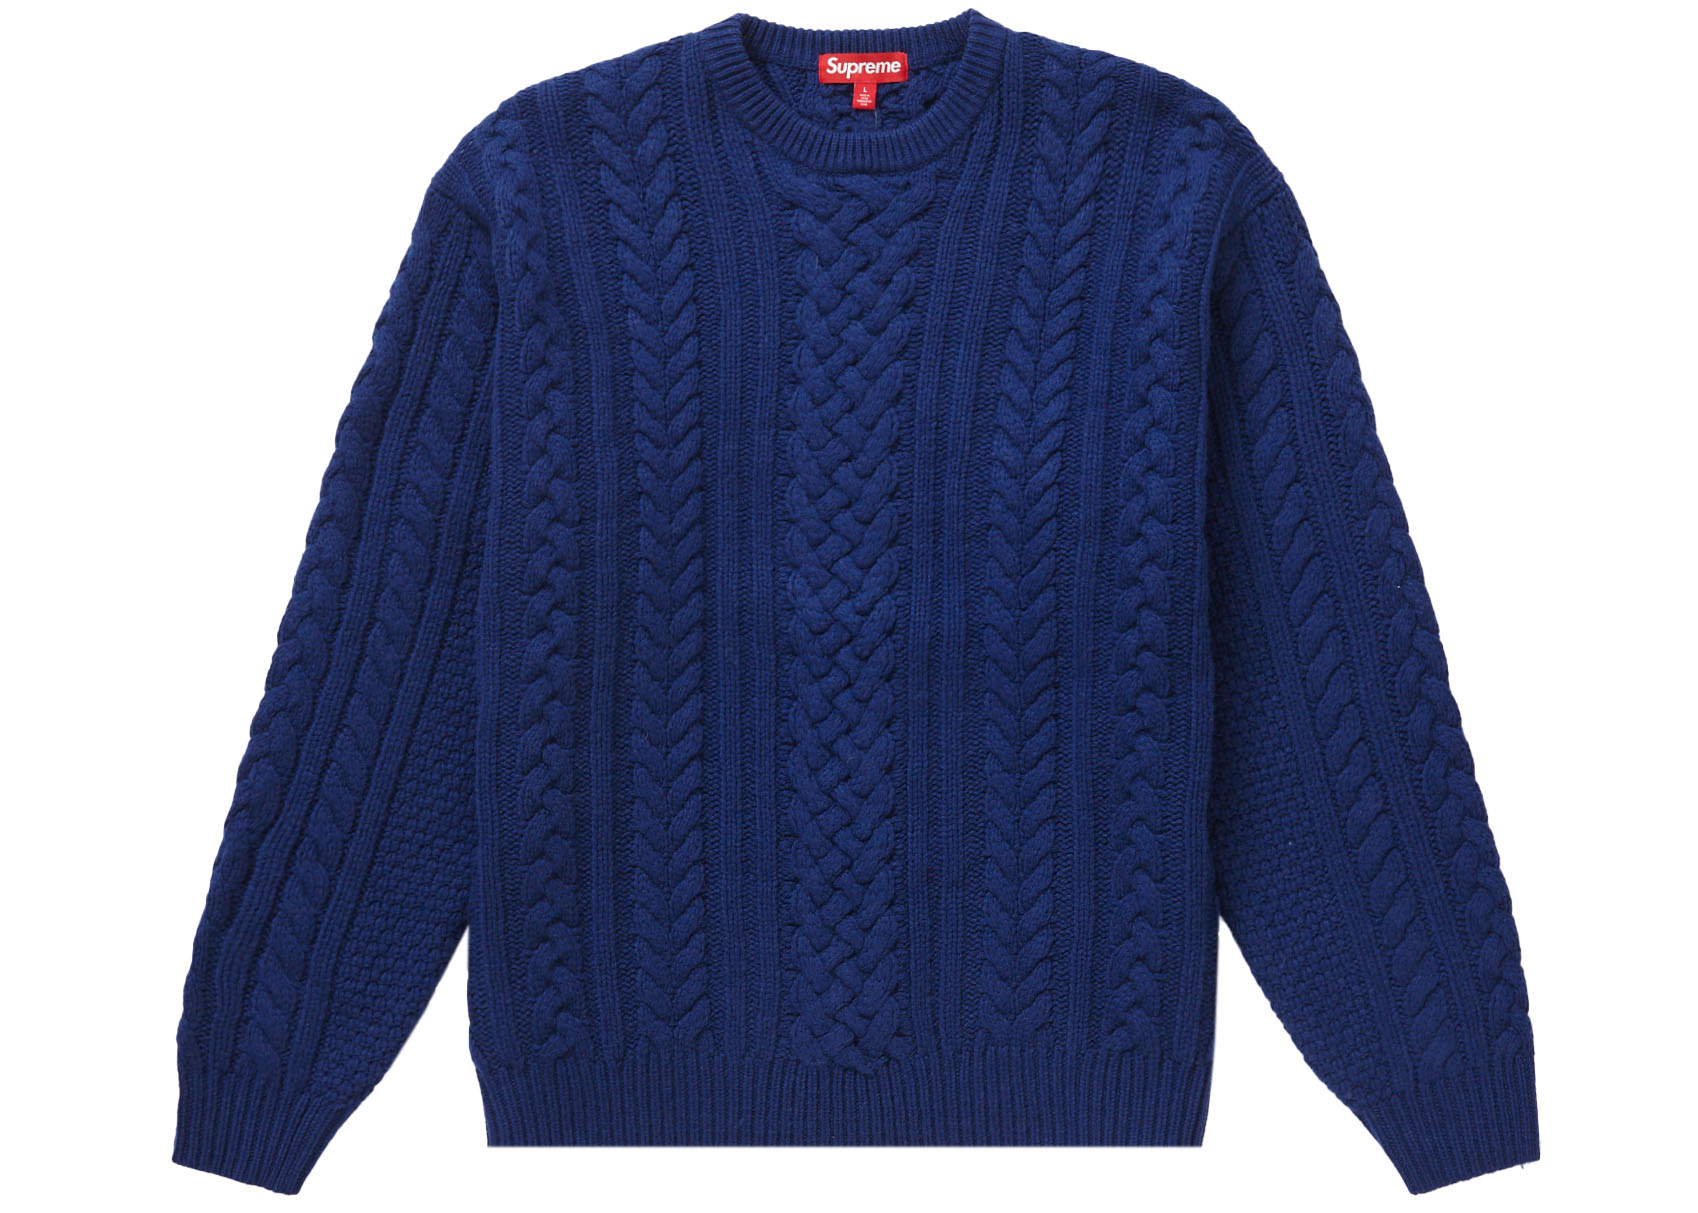 YE_SHOP_APPAREL【新品L】Supreme Applique Cable Knit Sweater